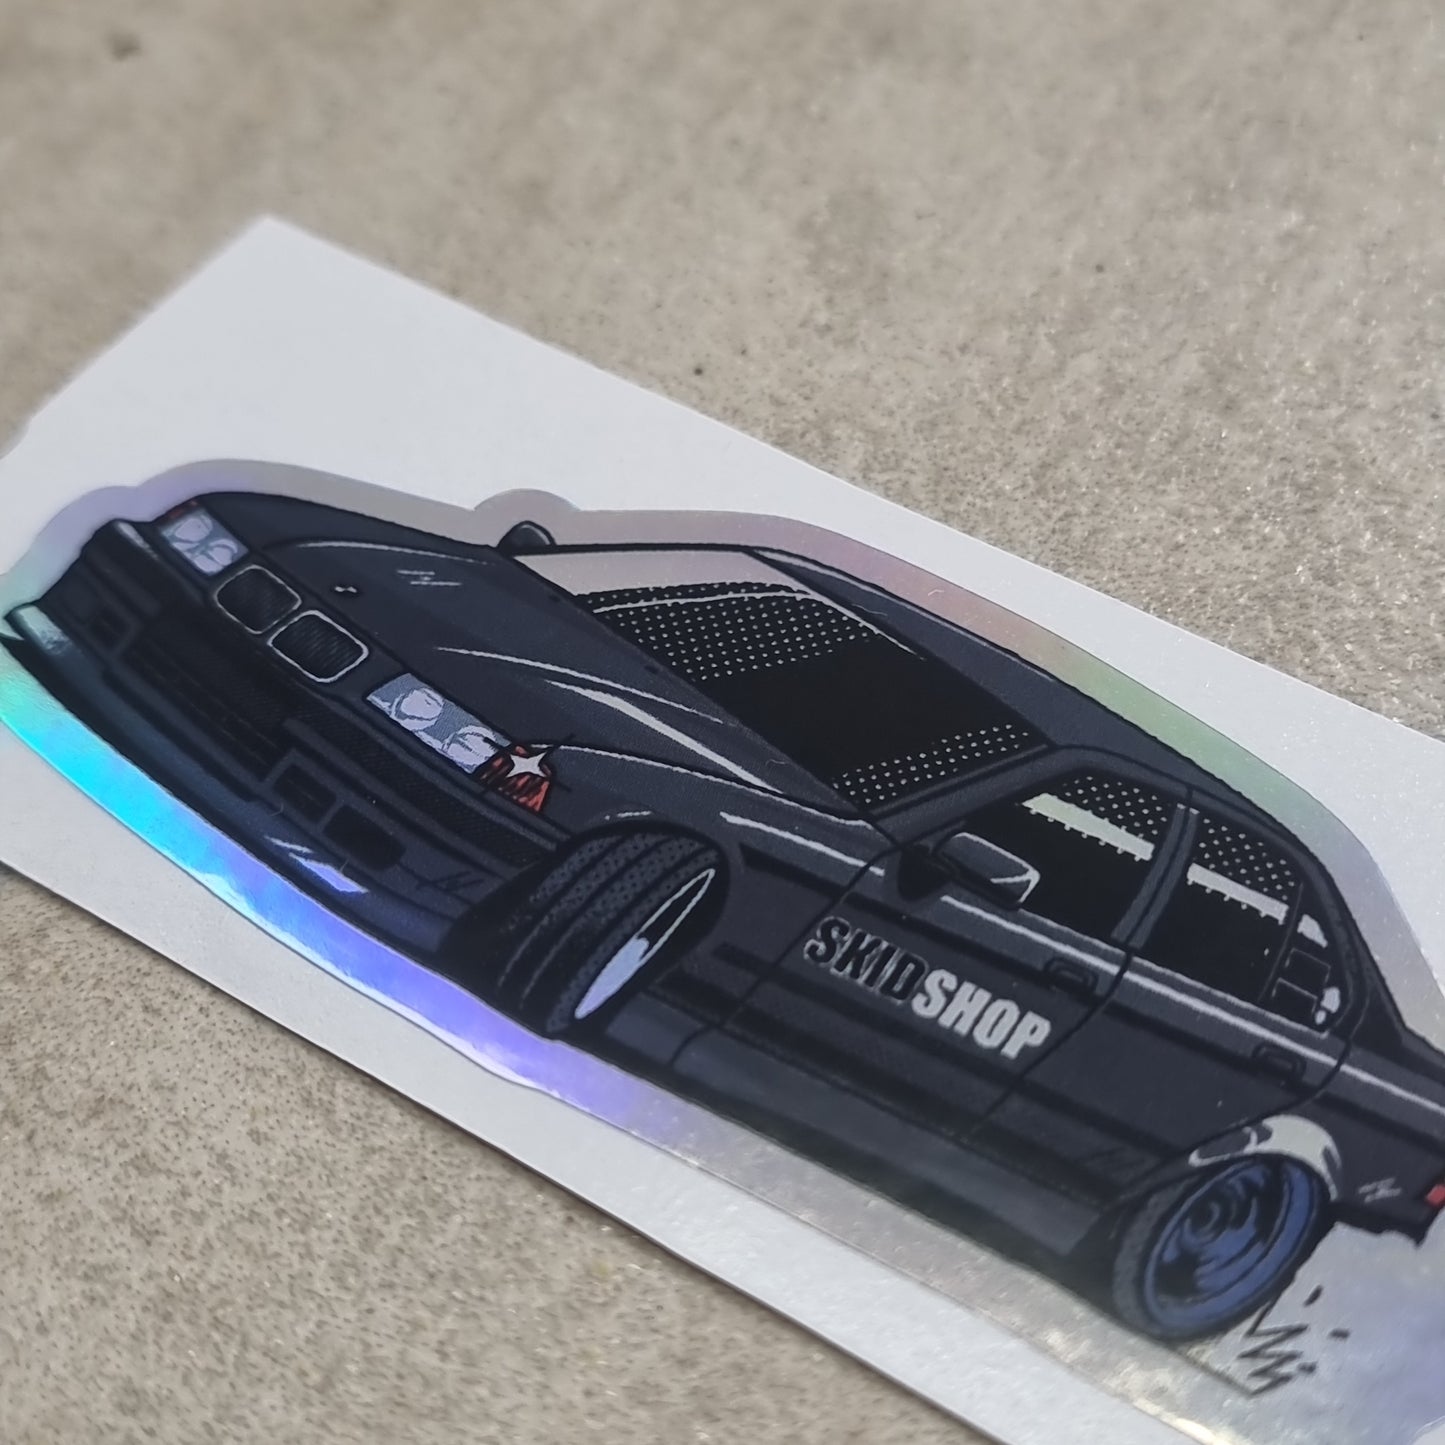 SkidShop mini holographic e36 sticker